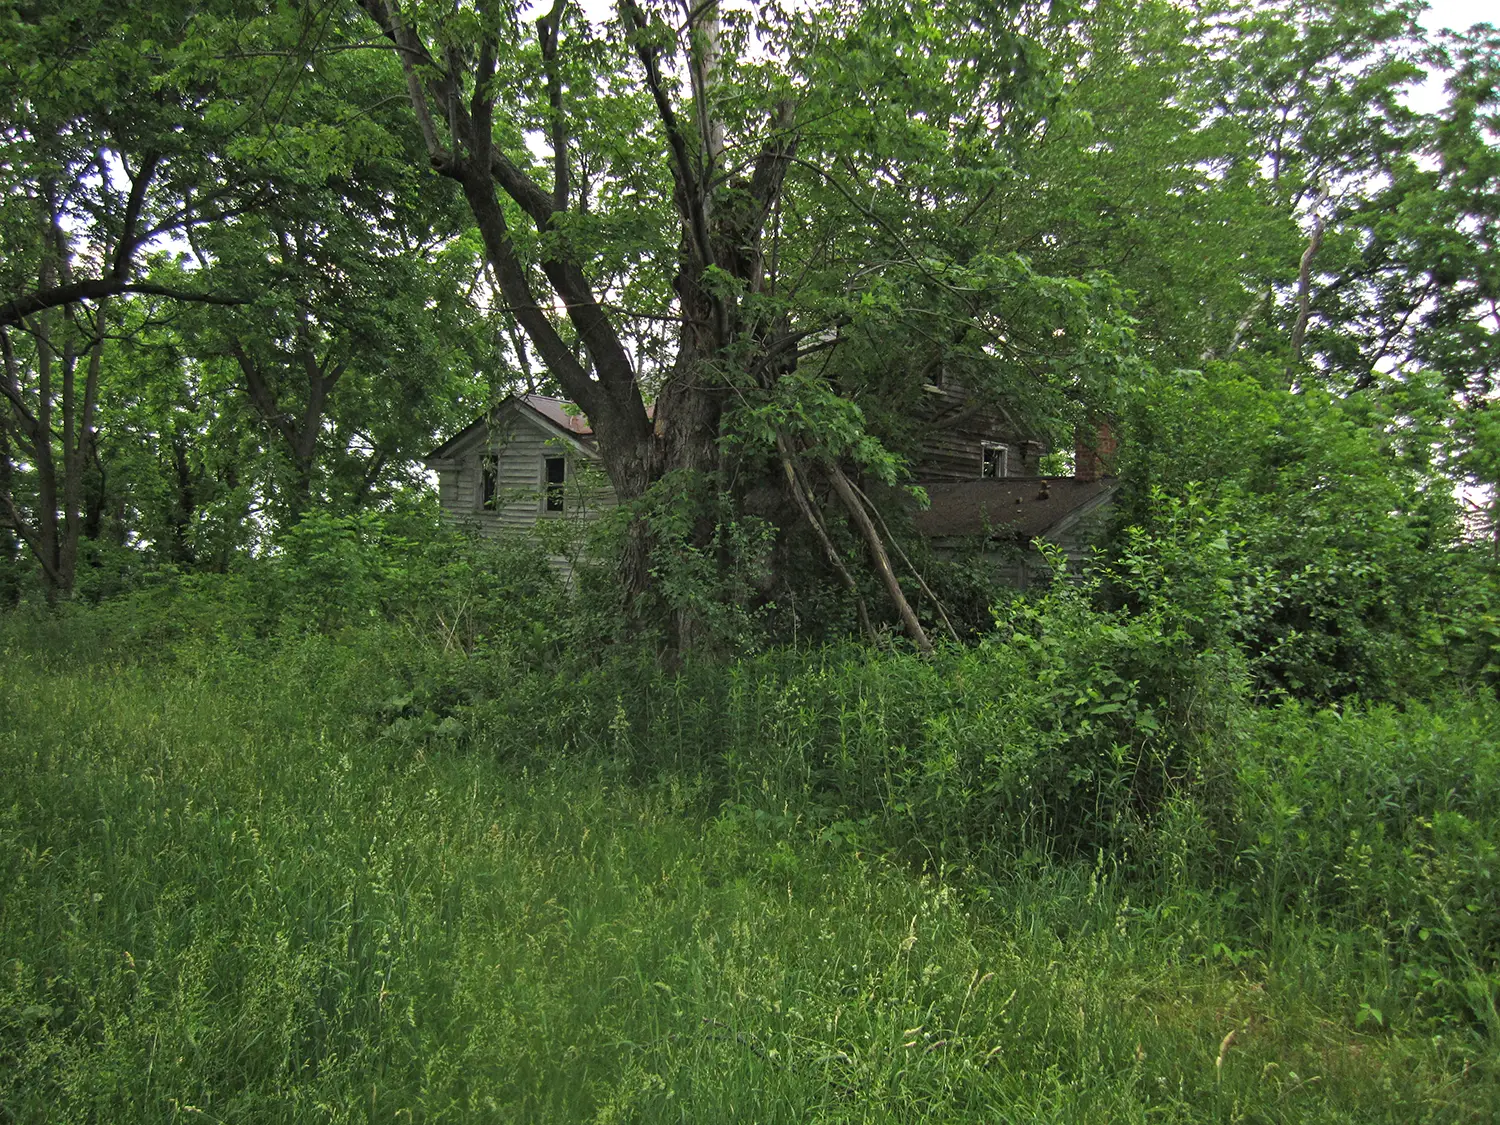 A scene of abundant foliage among which is an abandoned farmhouse.